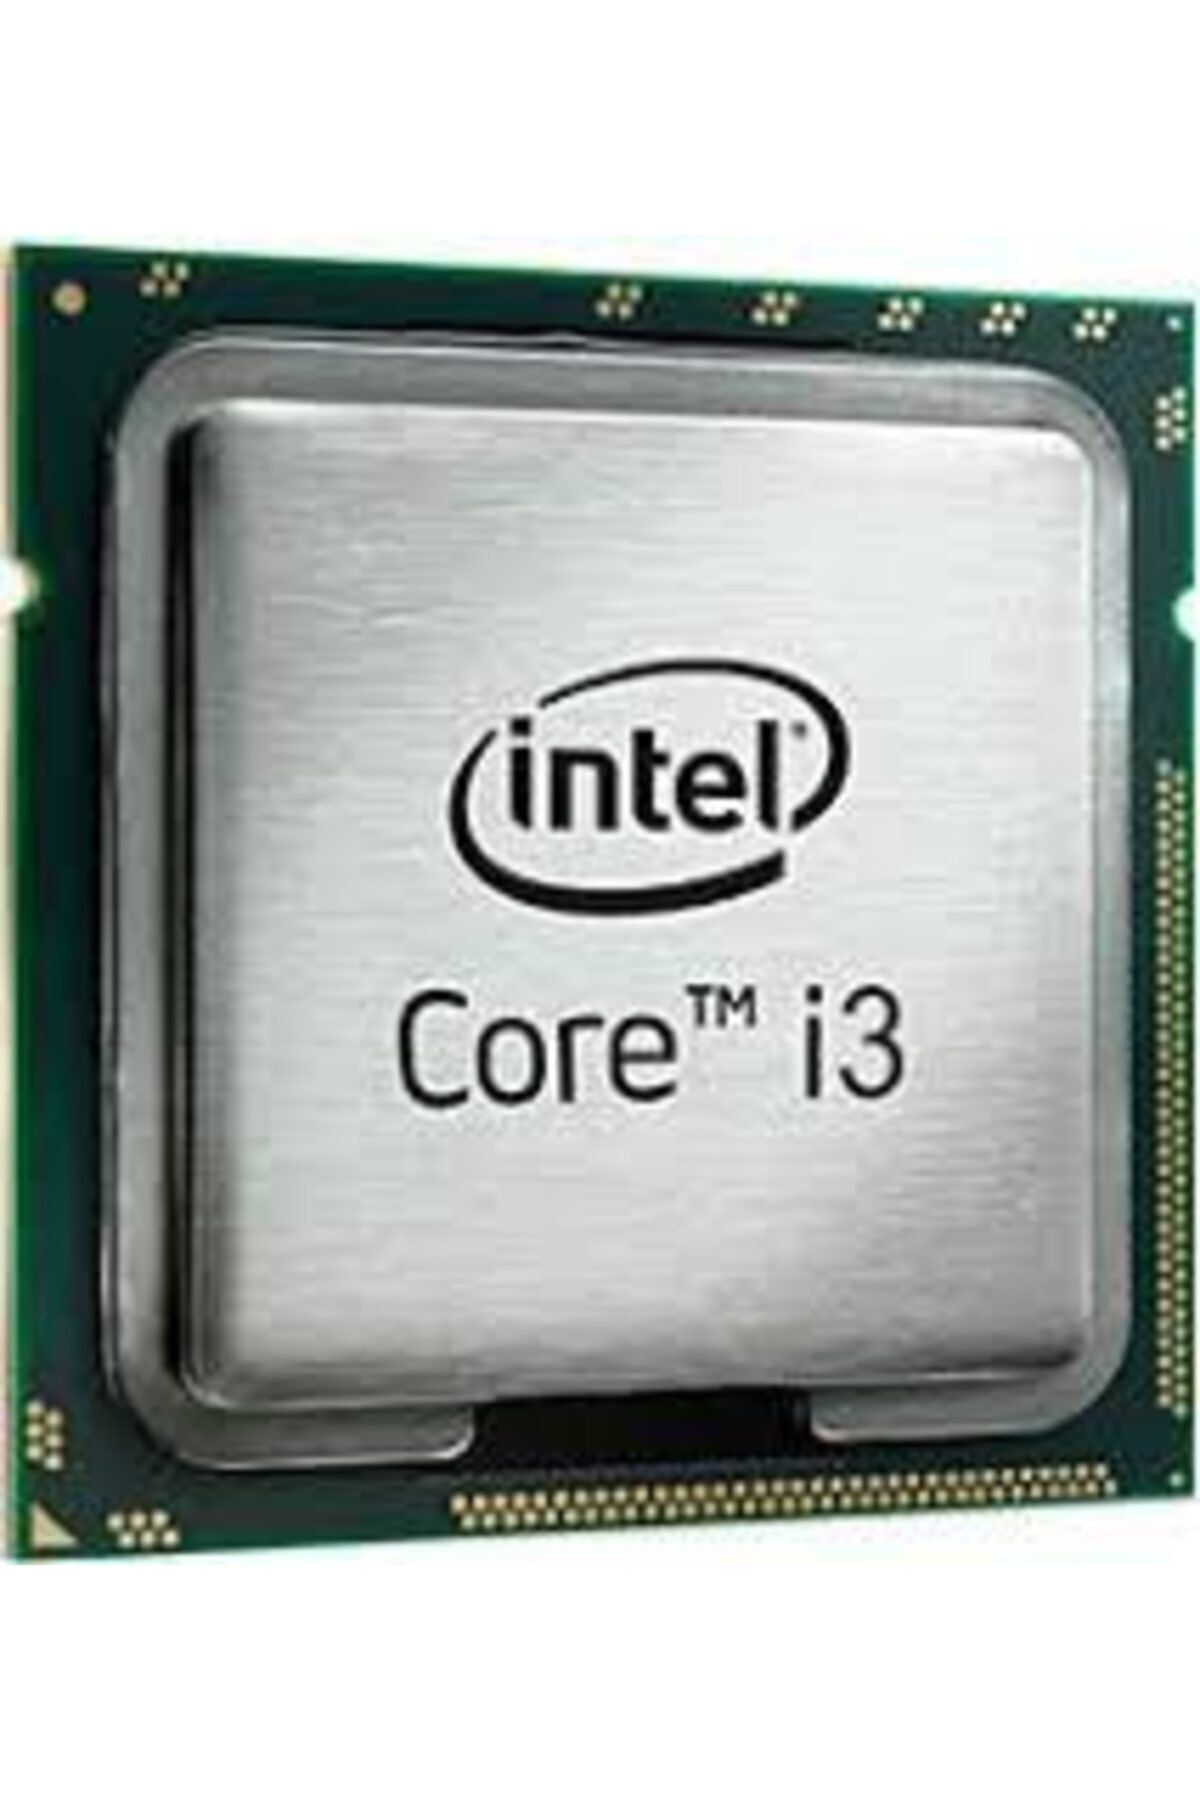 Intel Core I3 540 3.06ghz 4mb 1156pin İşlemci